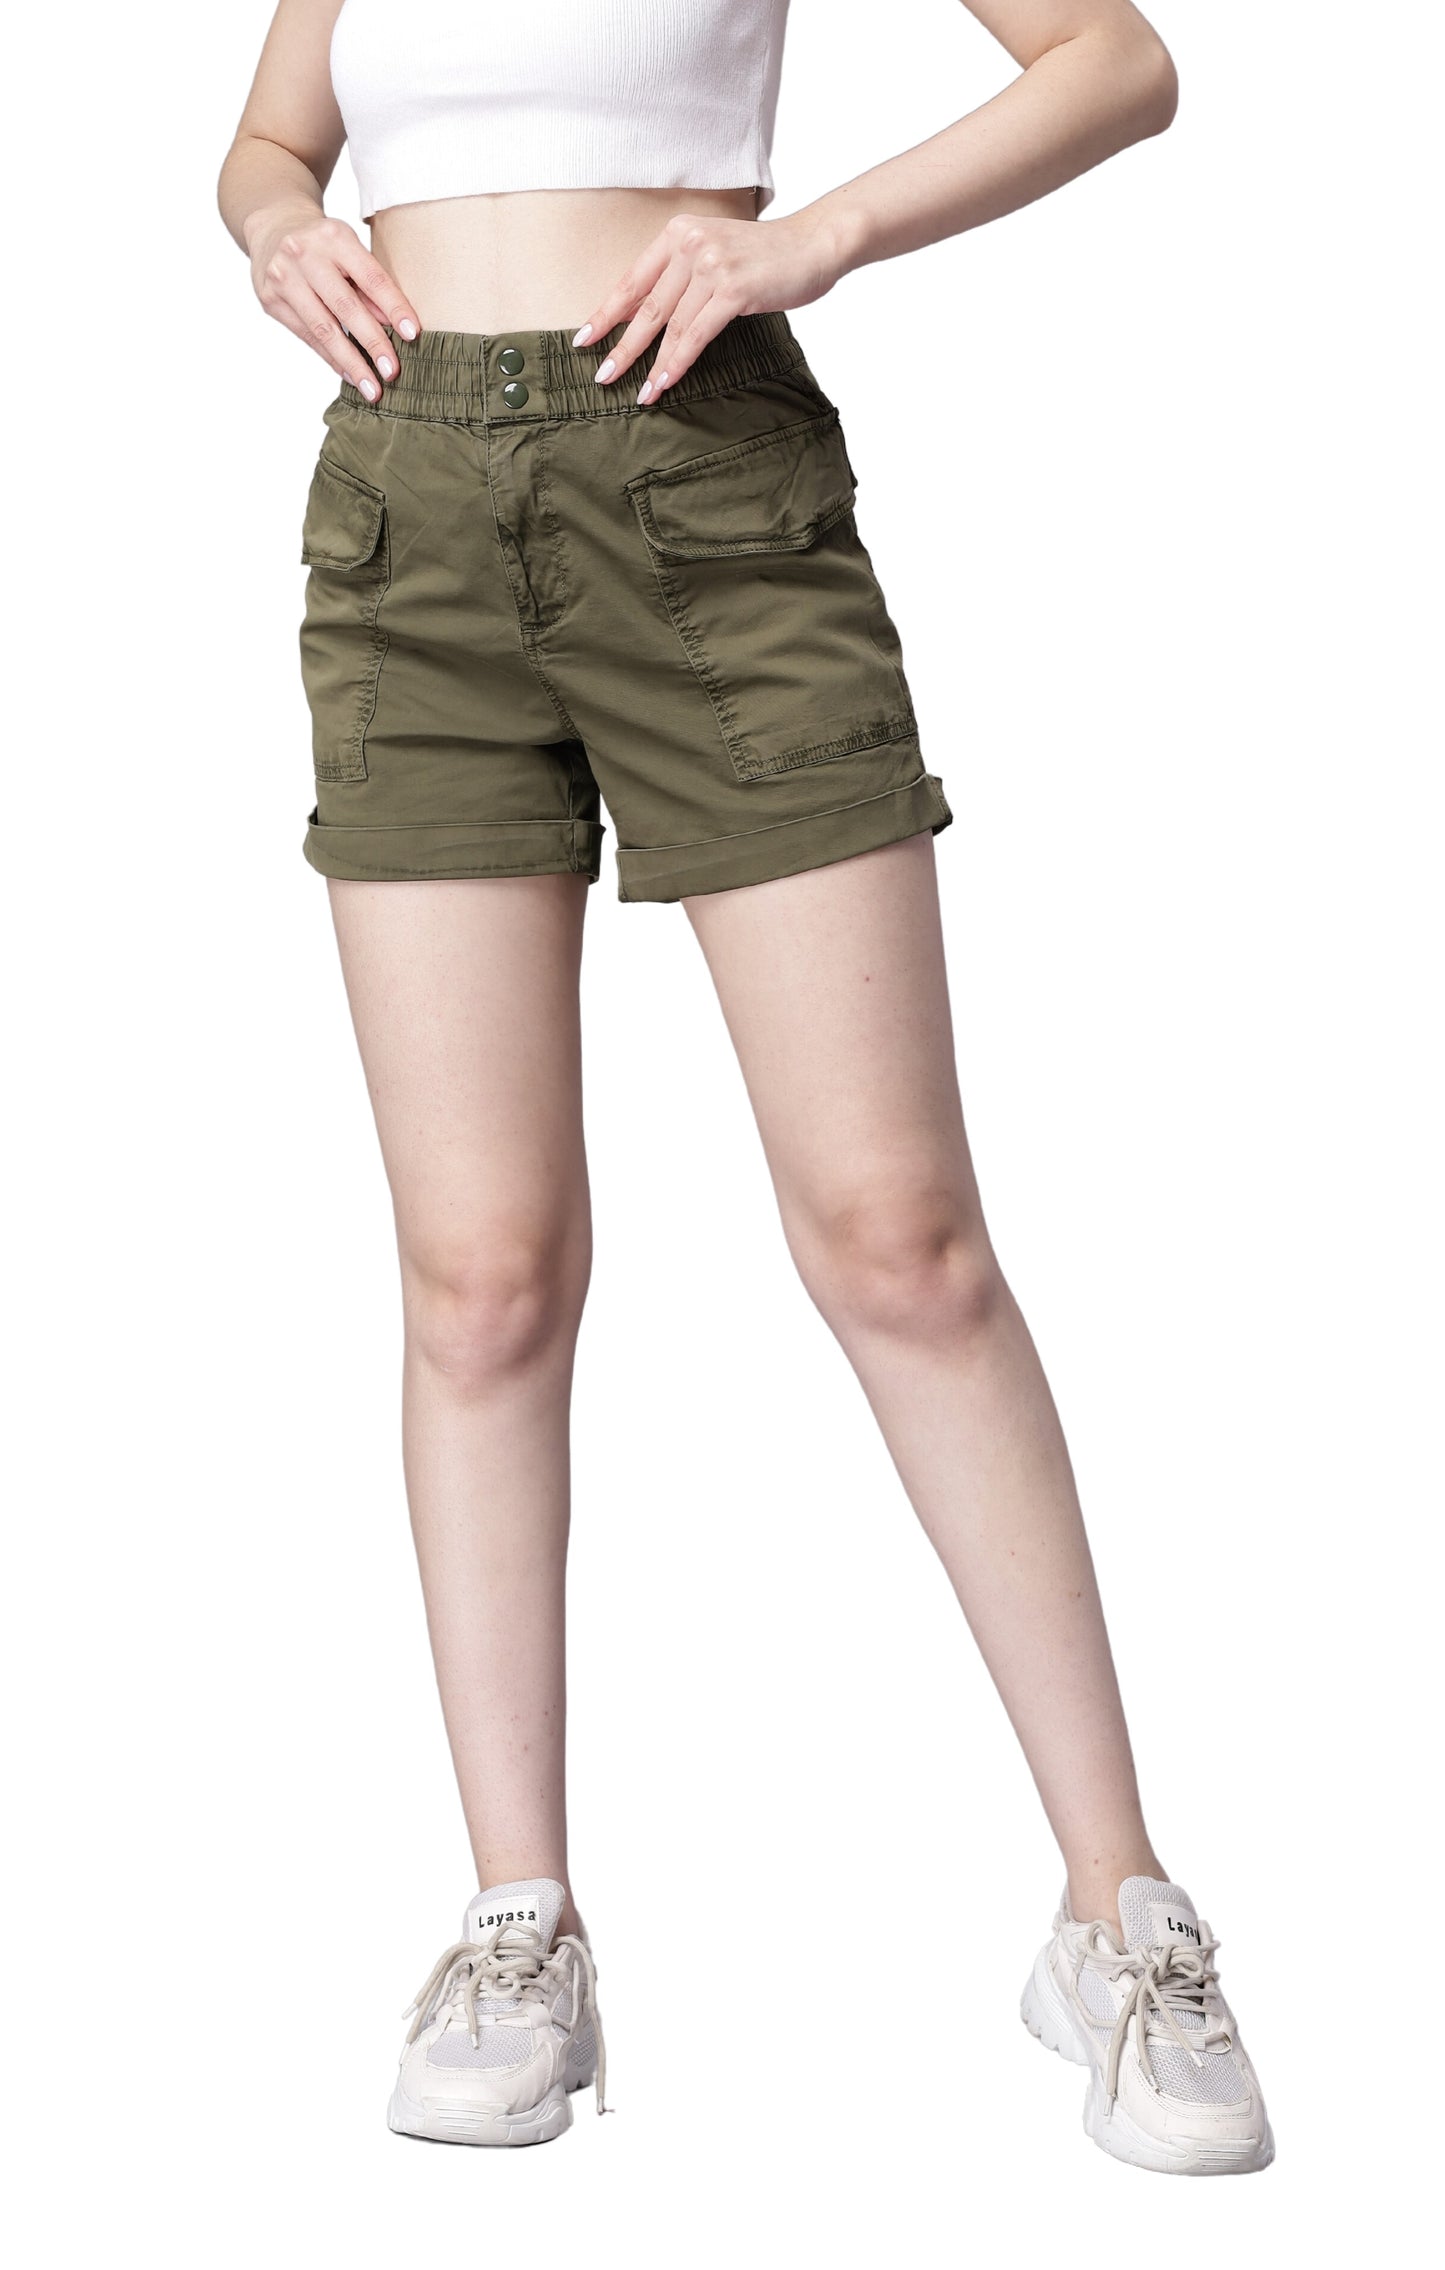 NUEVOSDAMAS Women Pure Cotton Cargo Yoga Shorts - Olive Green